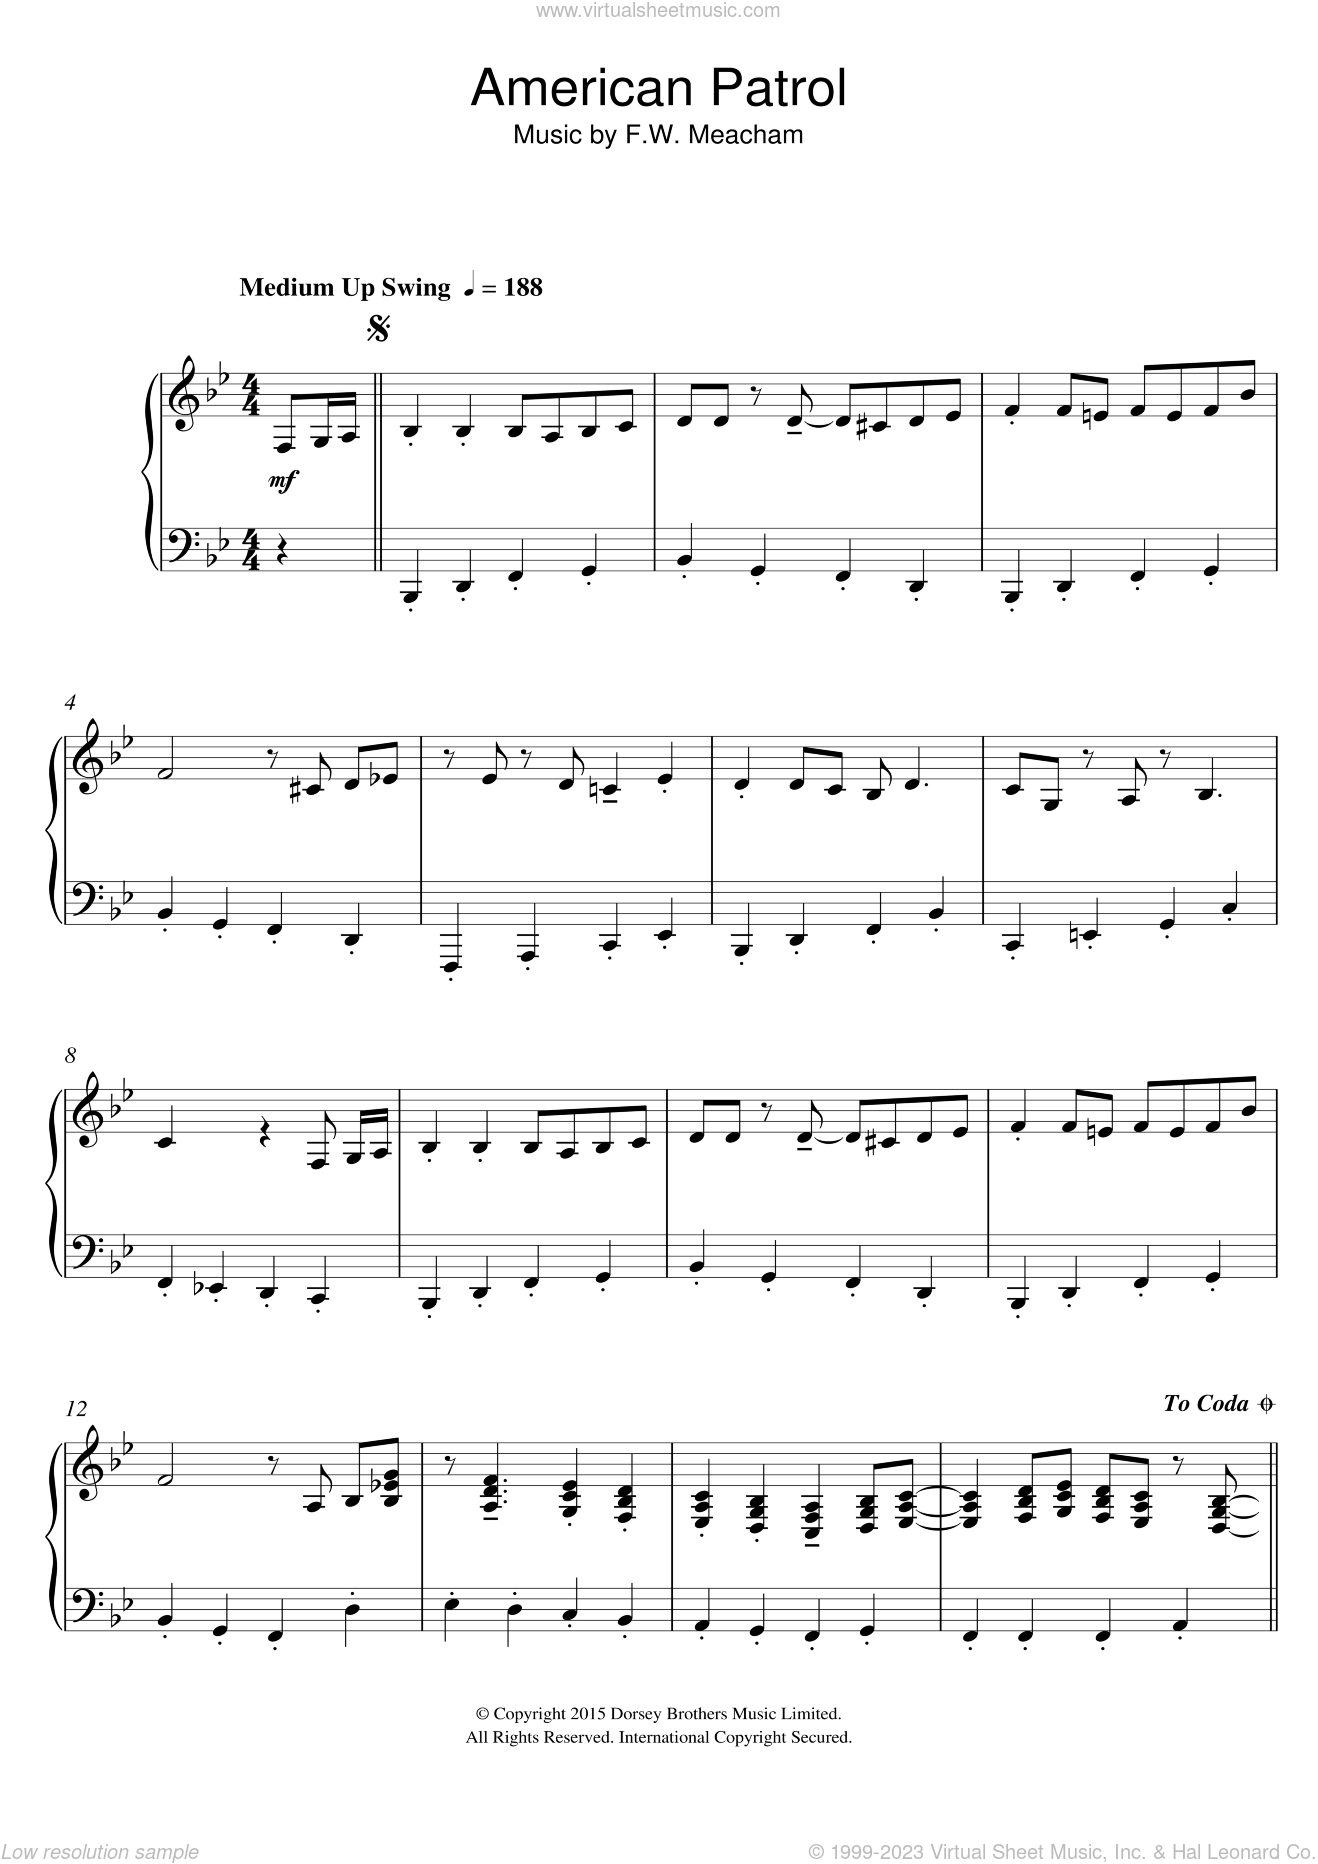 Englishby - American Patrol sheet music for piano solo (PDF)